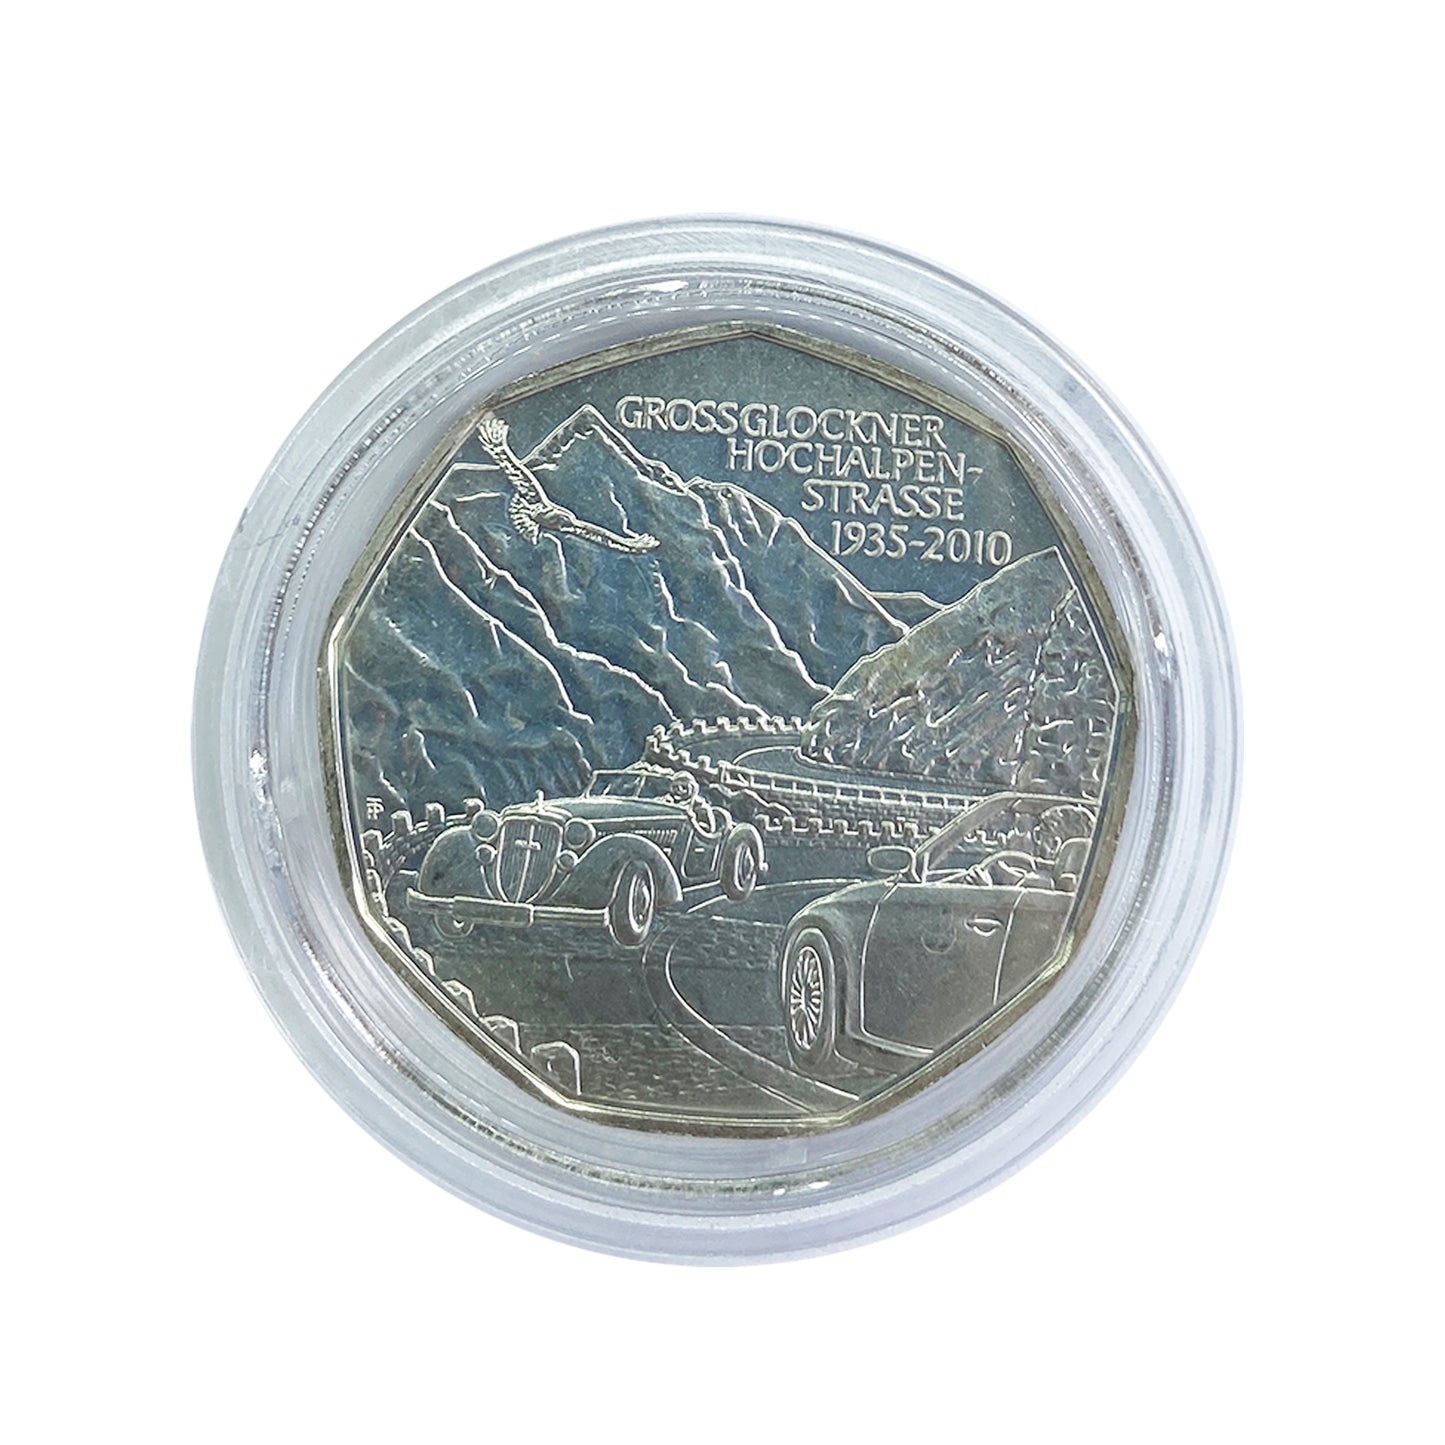 Austria - Moneda 5 euros plata 2010 - Carretera alpina del Grossglockner